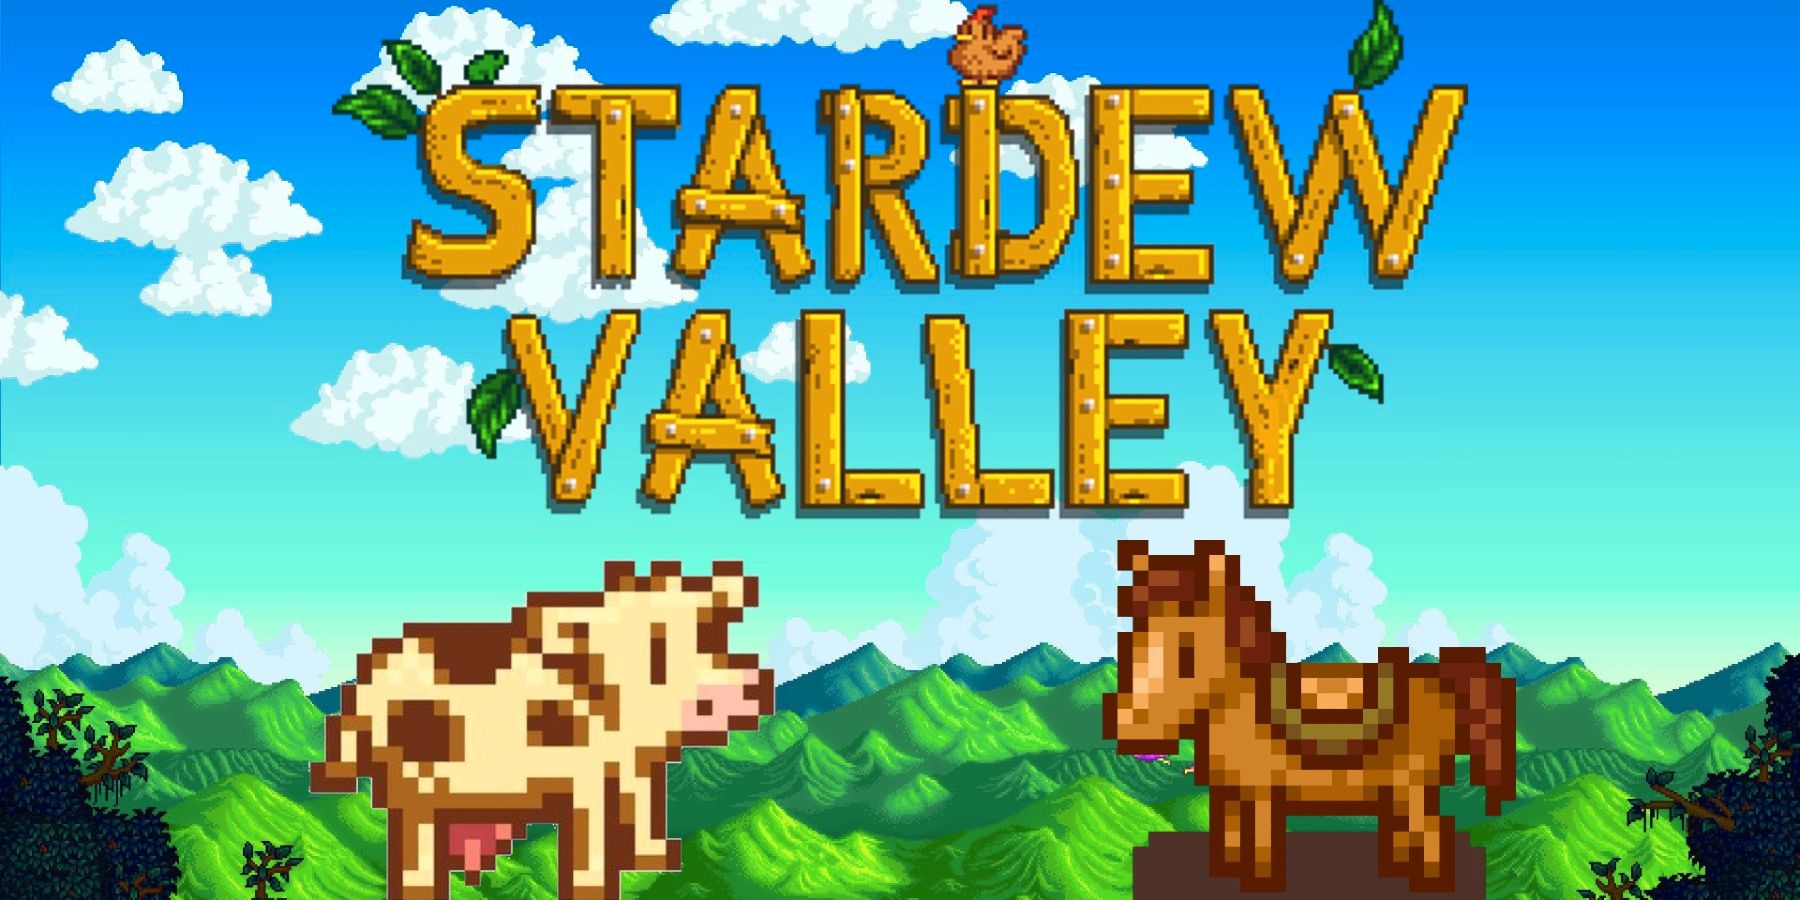 Wholesome Stardew Valley Clip mostra o gado ‘pastoreando’ do jogador